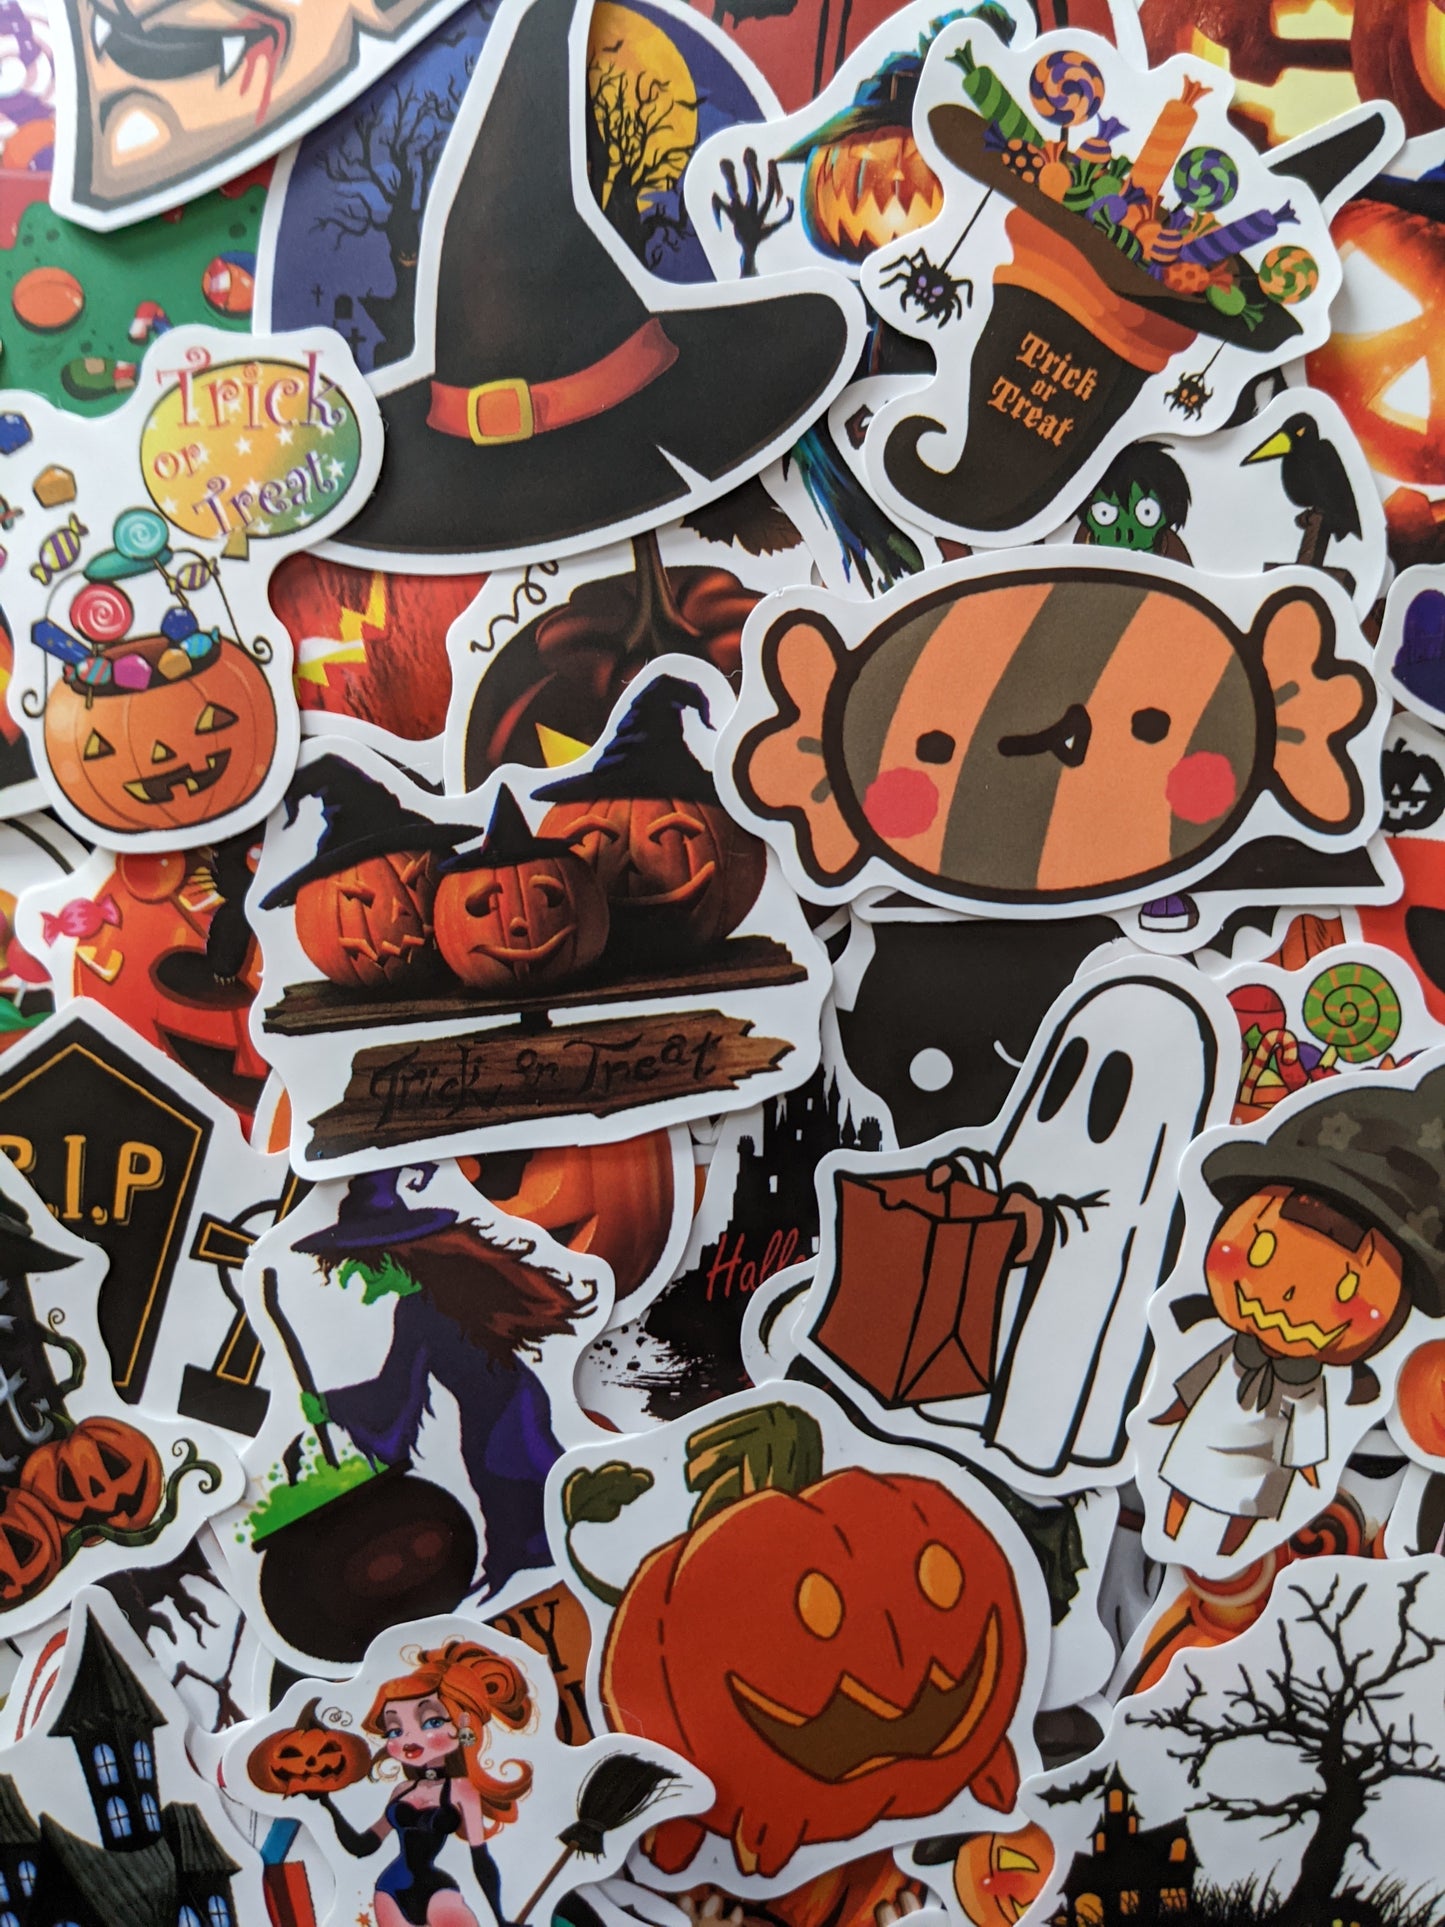 Halloween Trick-or-Treat Sticker Pack